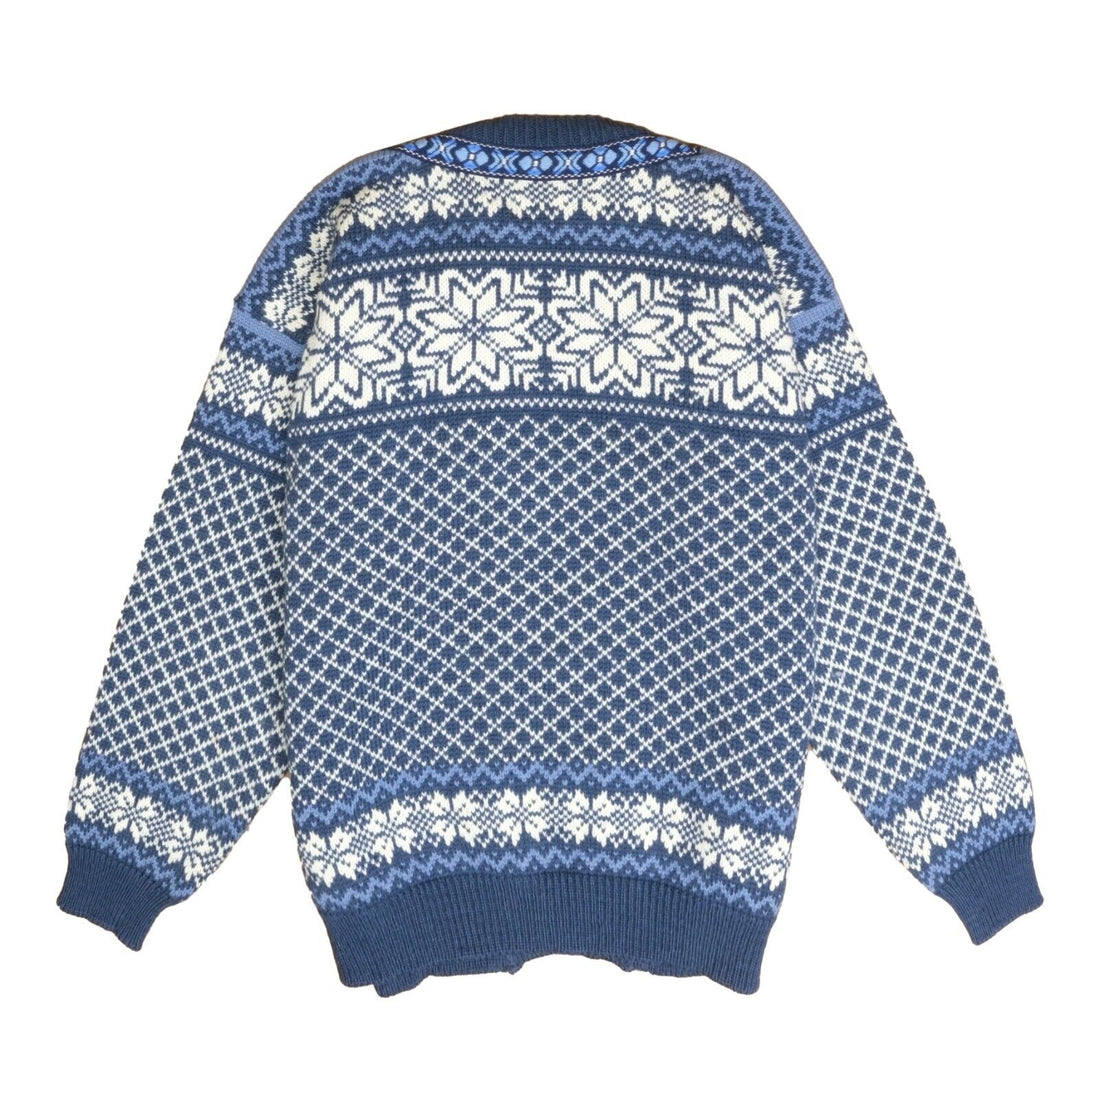 Vintage Norwool Wool Knit Cardigan Sweater Size Medium Fair Isle